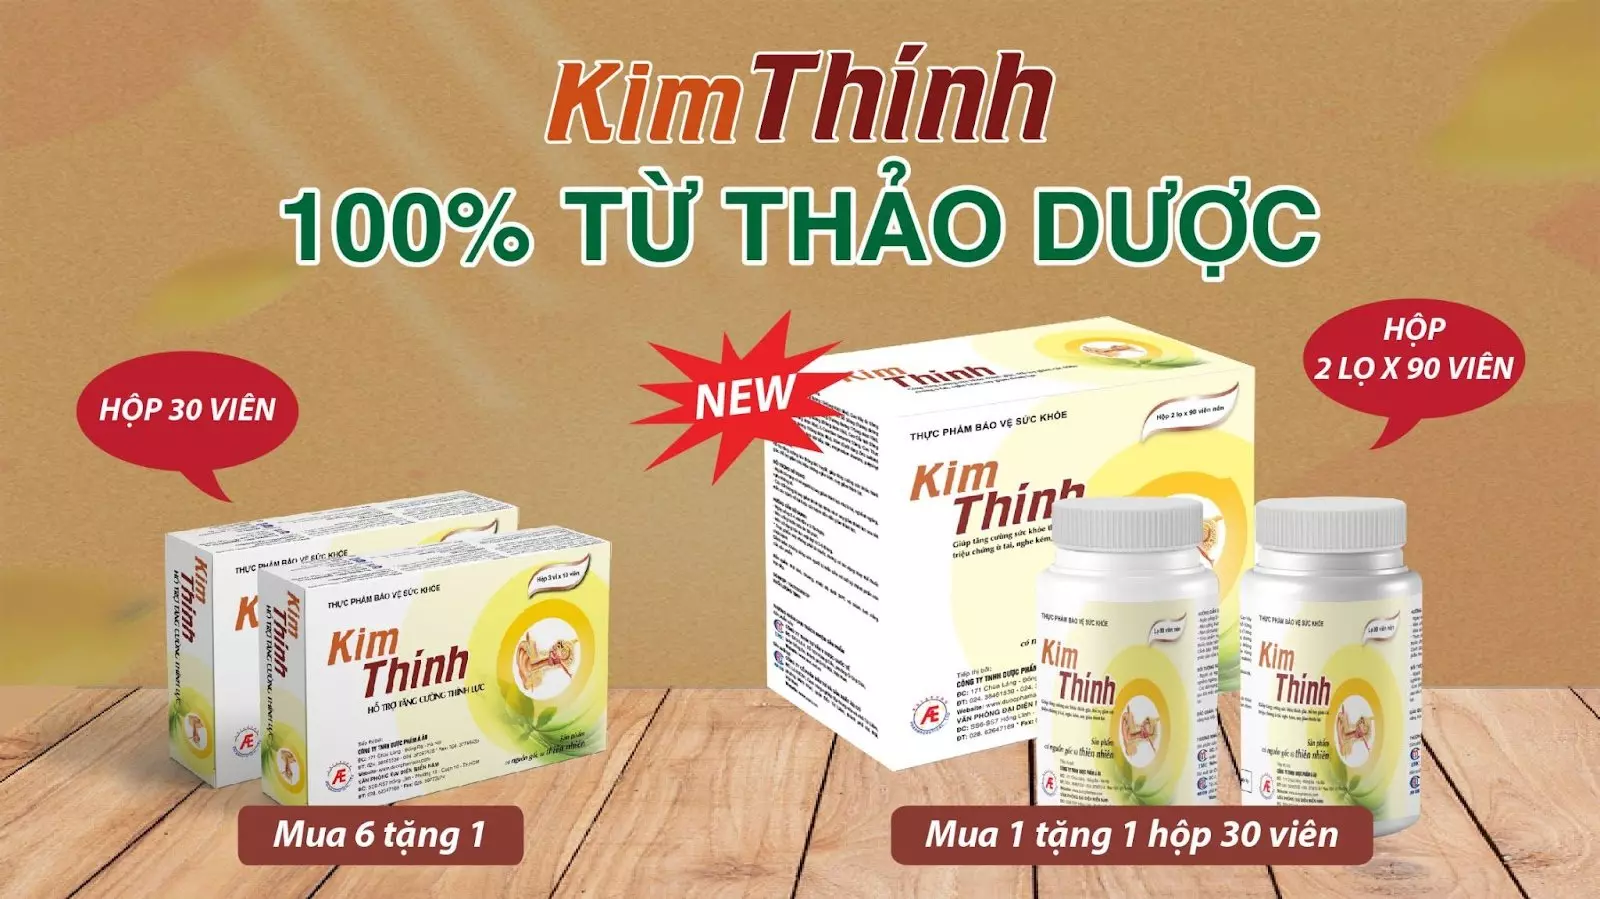 Kim-Thinh-la-giai-phap-ho-tro-dieu-tri-viem-tai-giua-huu-hieu.webp